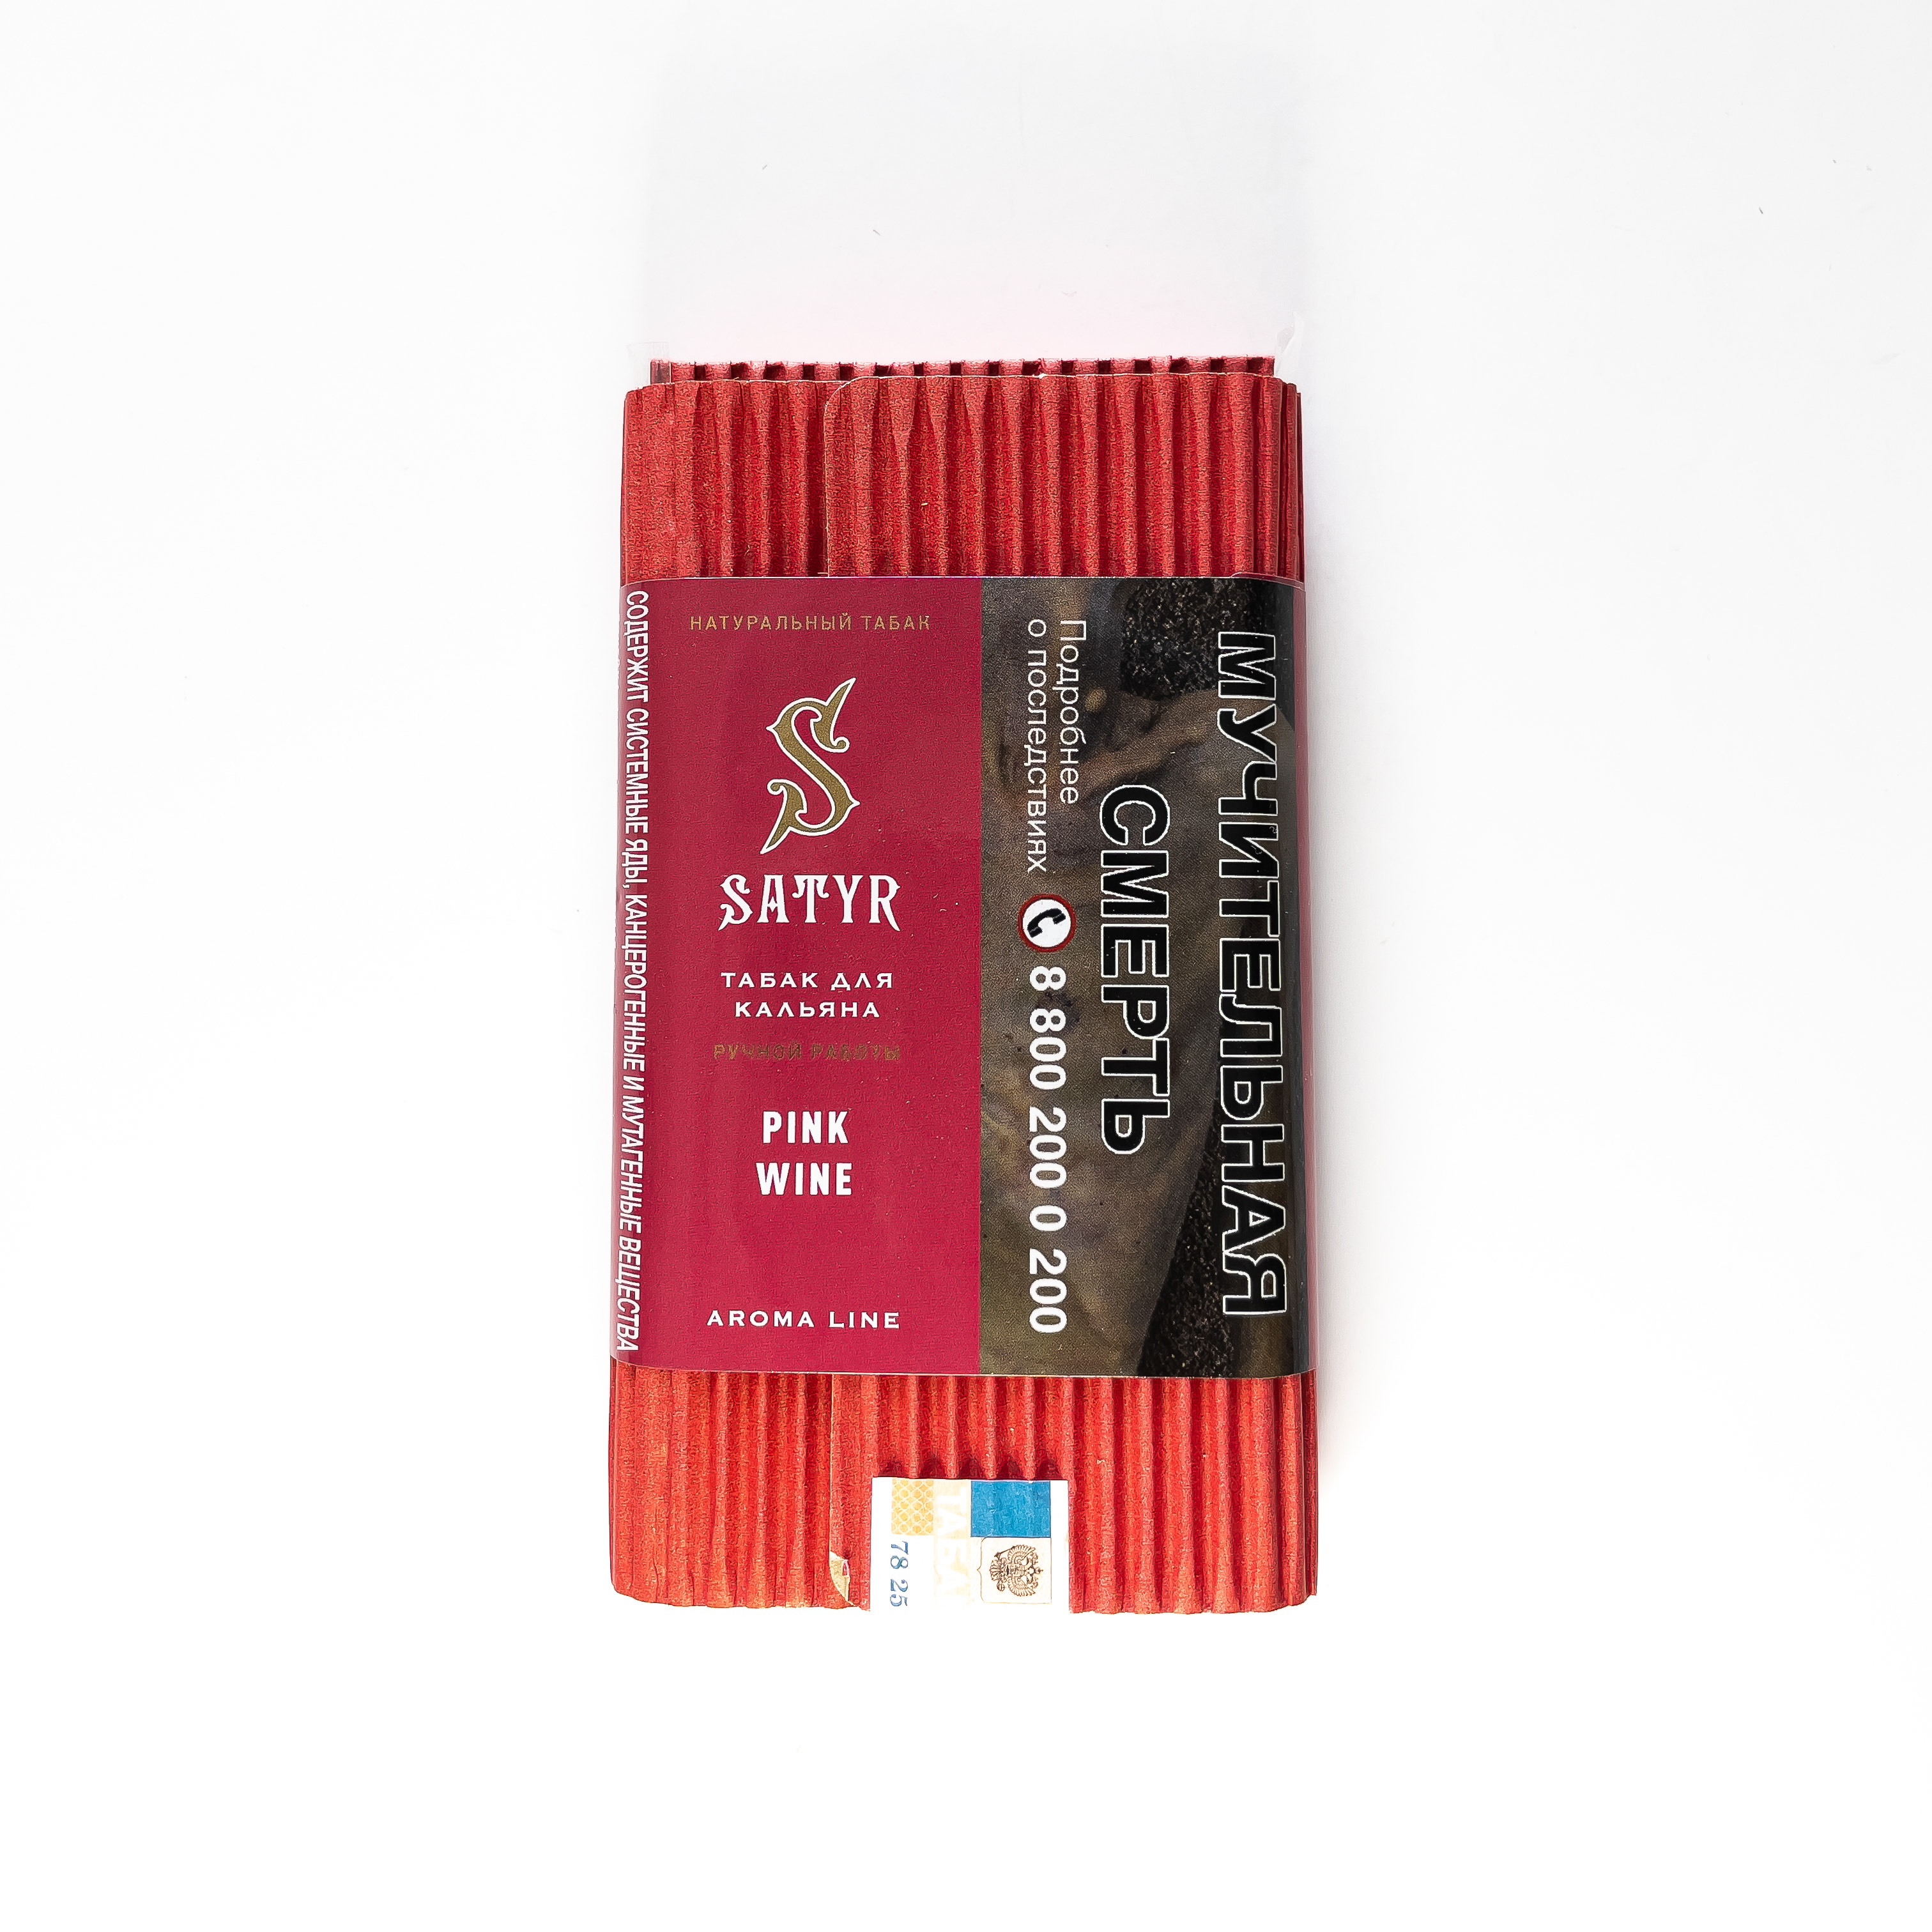 Табак Satyr - PINK WINE - 100 g